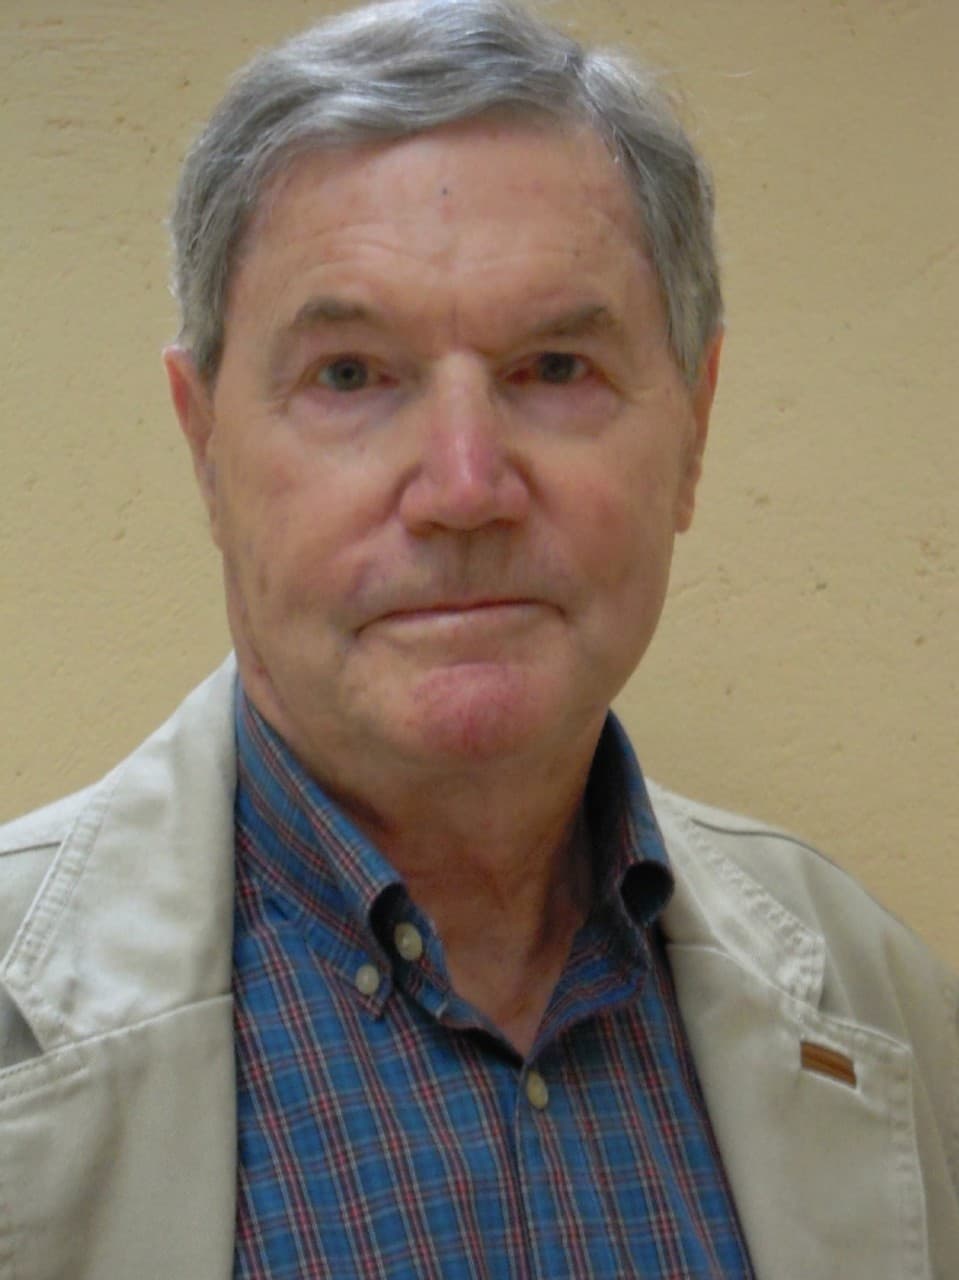 Author Joseph Harris (Dan Snow)